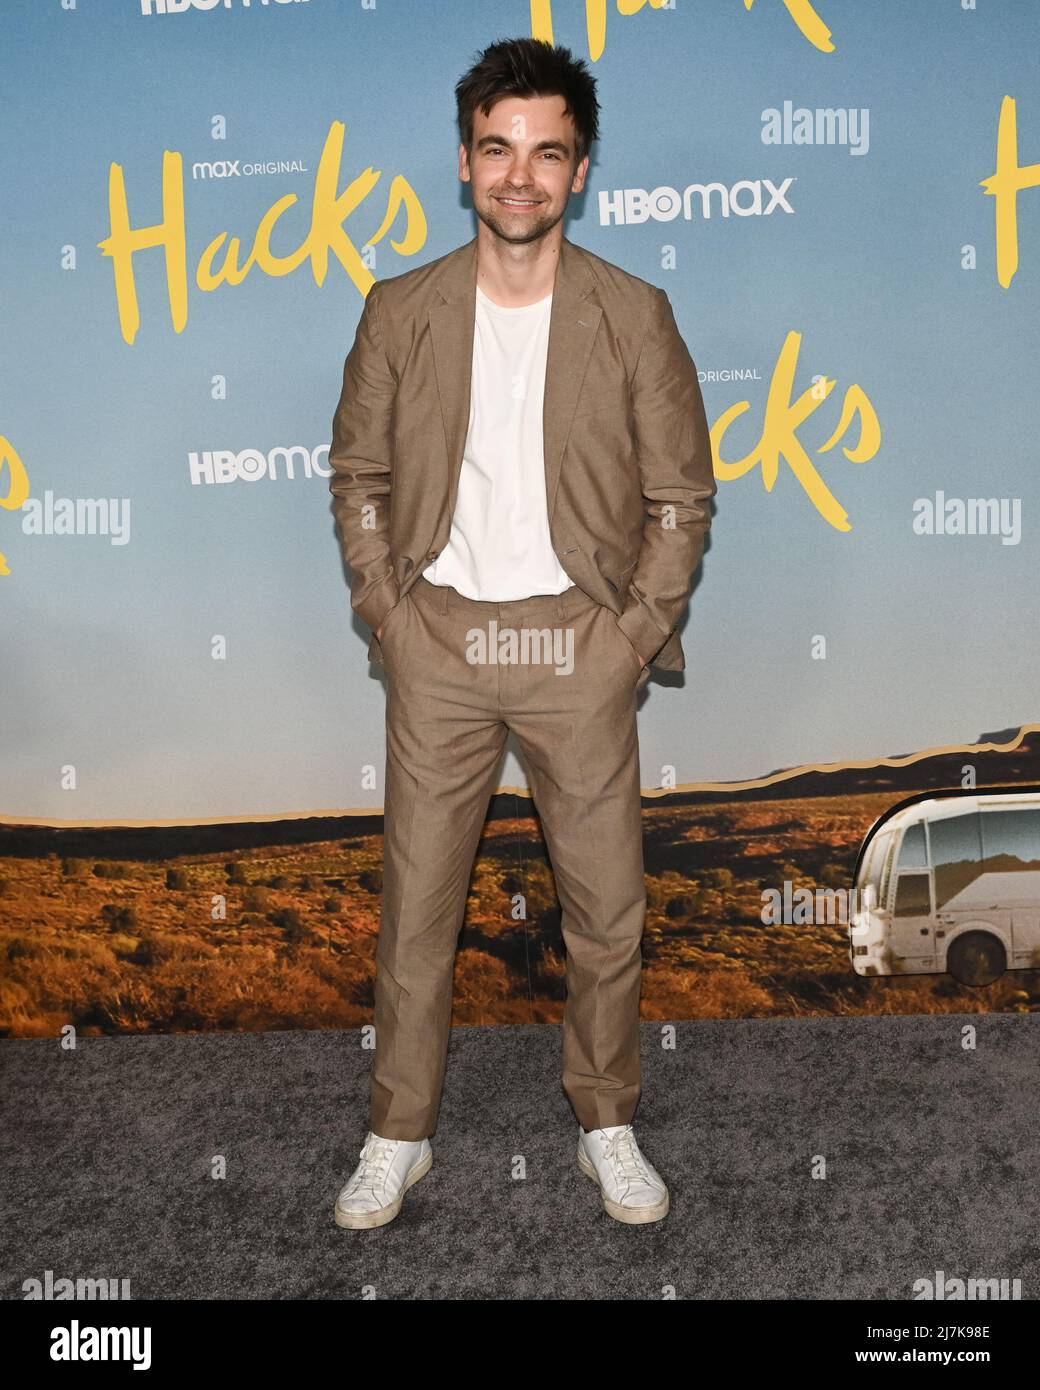 09 mai 2022 - San Diego, Californie - Drew Tarver. Los Angeles saison 2 première de HBO Max 'Hackss' (Credit image: © Billy Bennight/AdMedia via ZUMA Press Wire) Banque D'Images